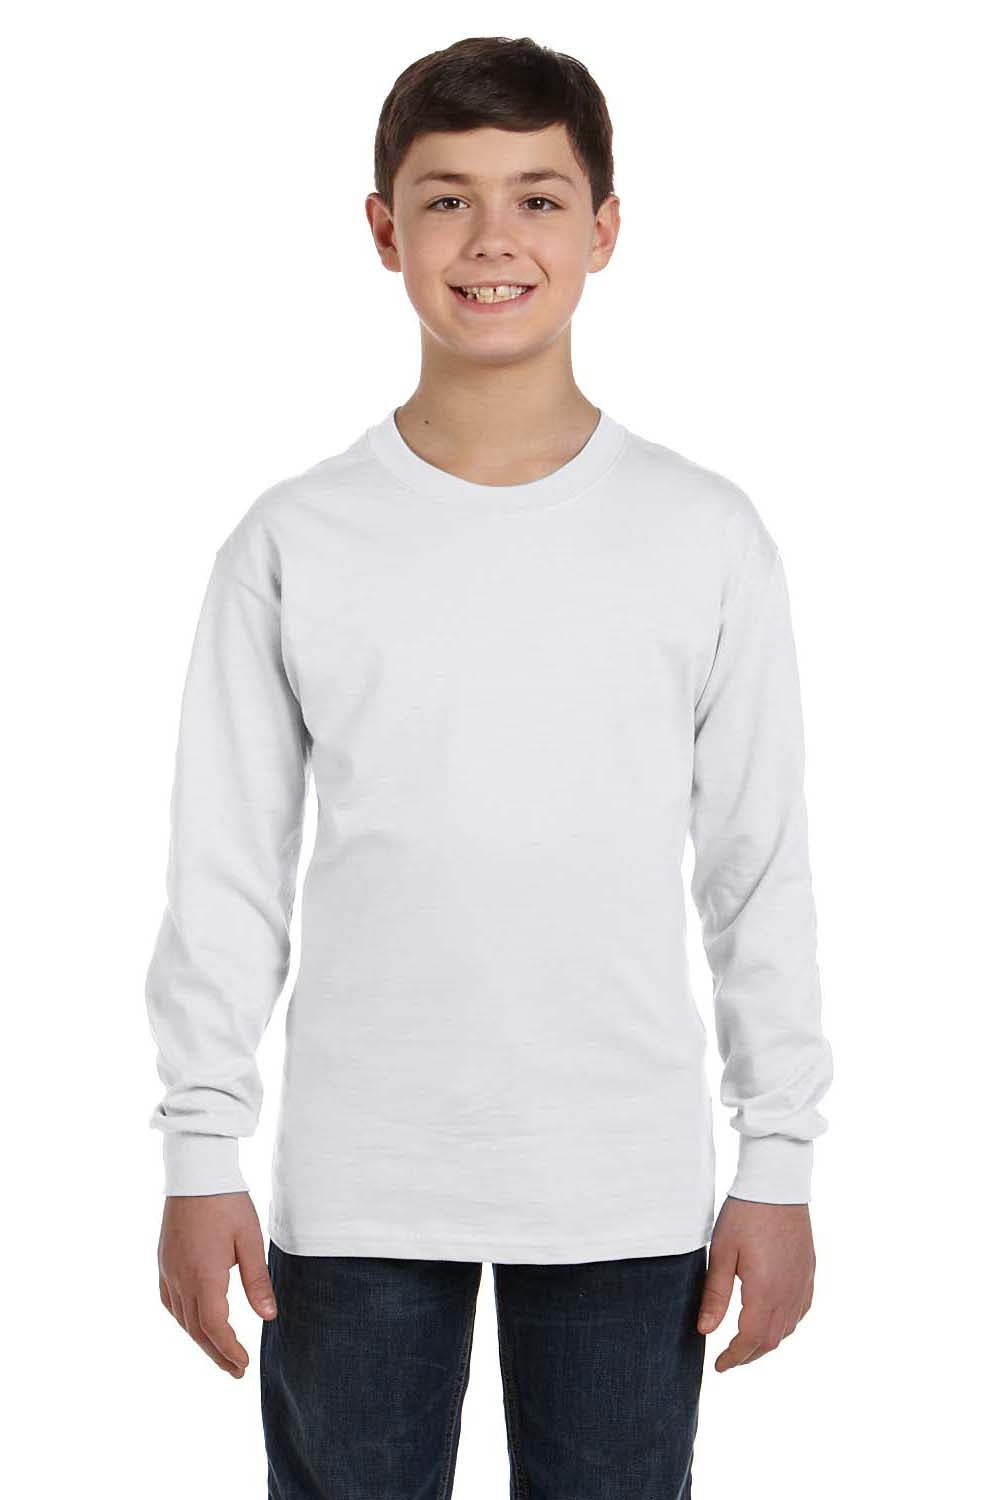 Hanes 5546 Youth ComfortSoft Long Sleeve Crewneck T-Shirt White Front